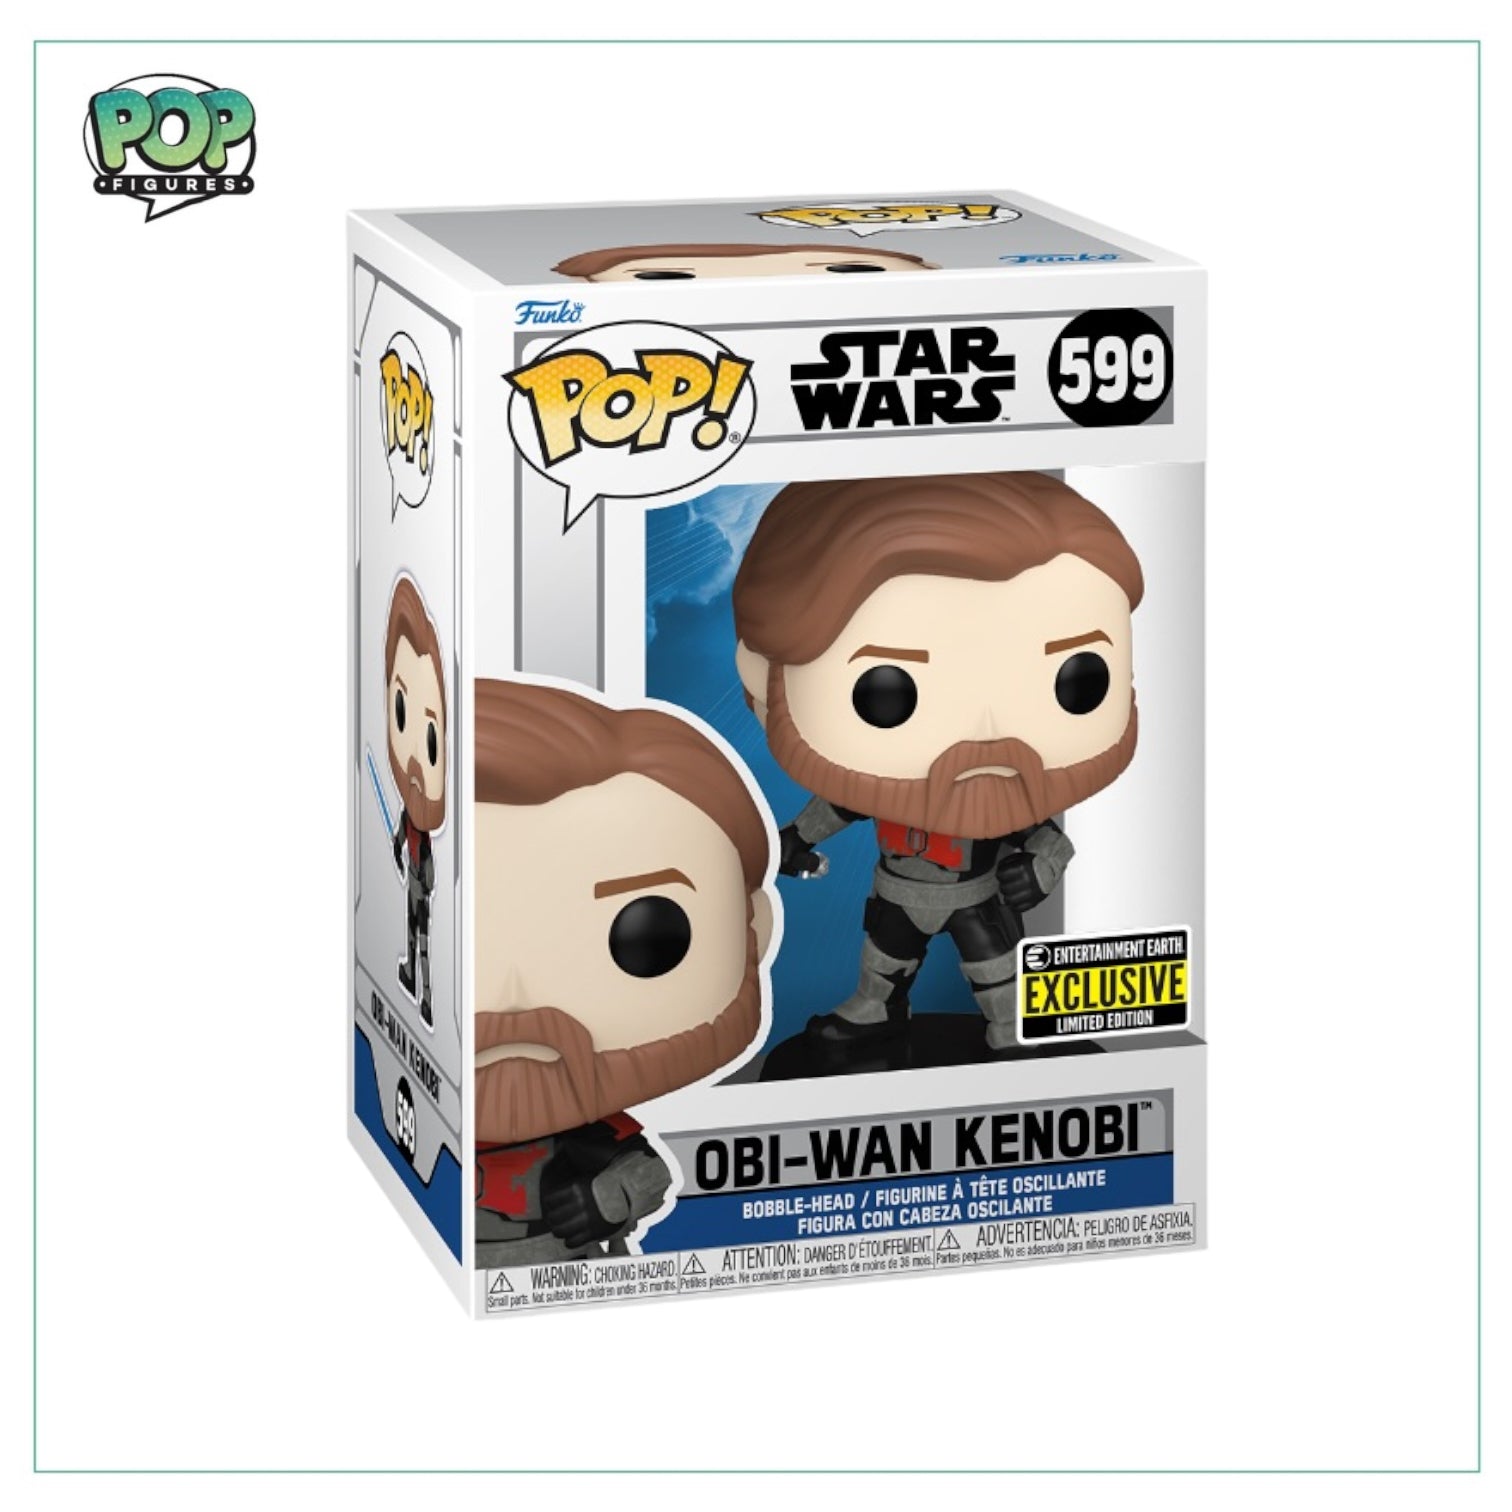 Obi-Wan Kenobi #599 Funko Pop! - Star Wars - Entertainment Earth Exclusive